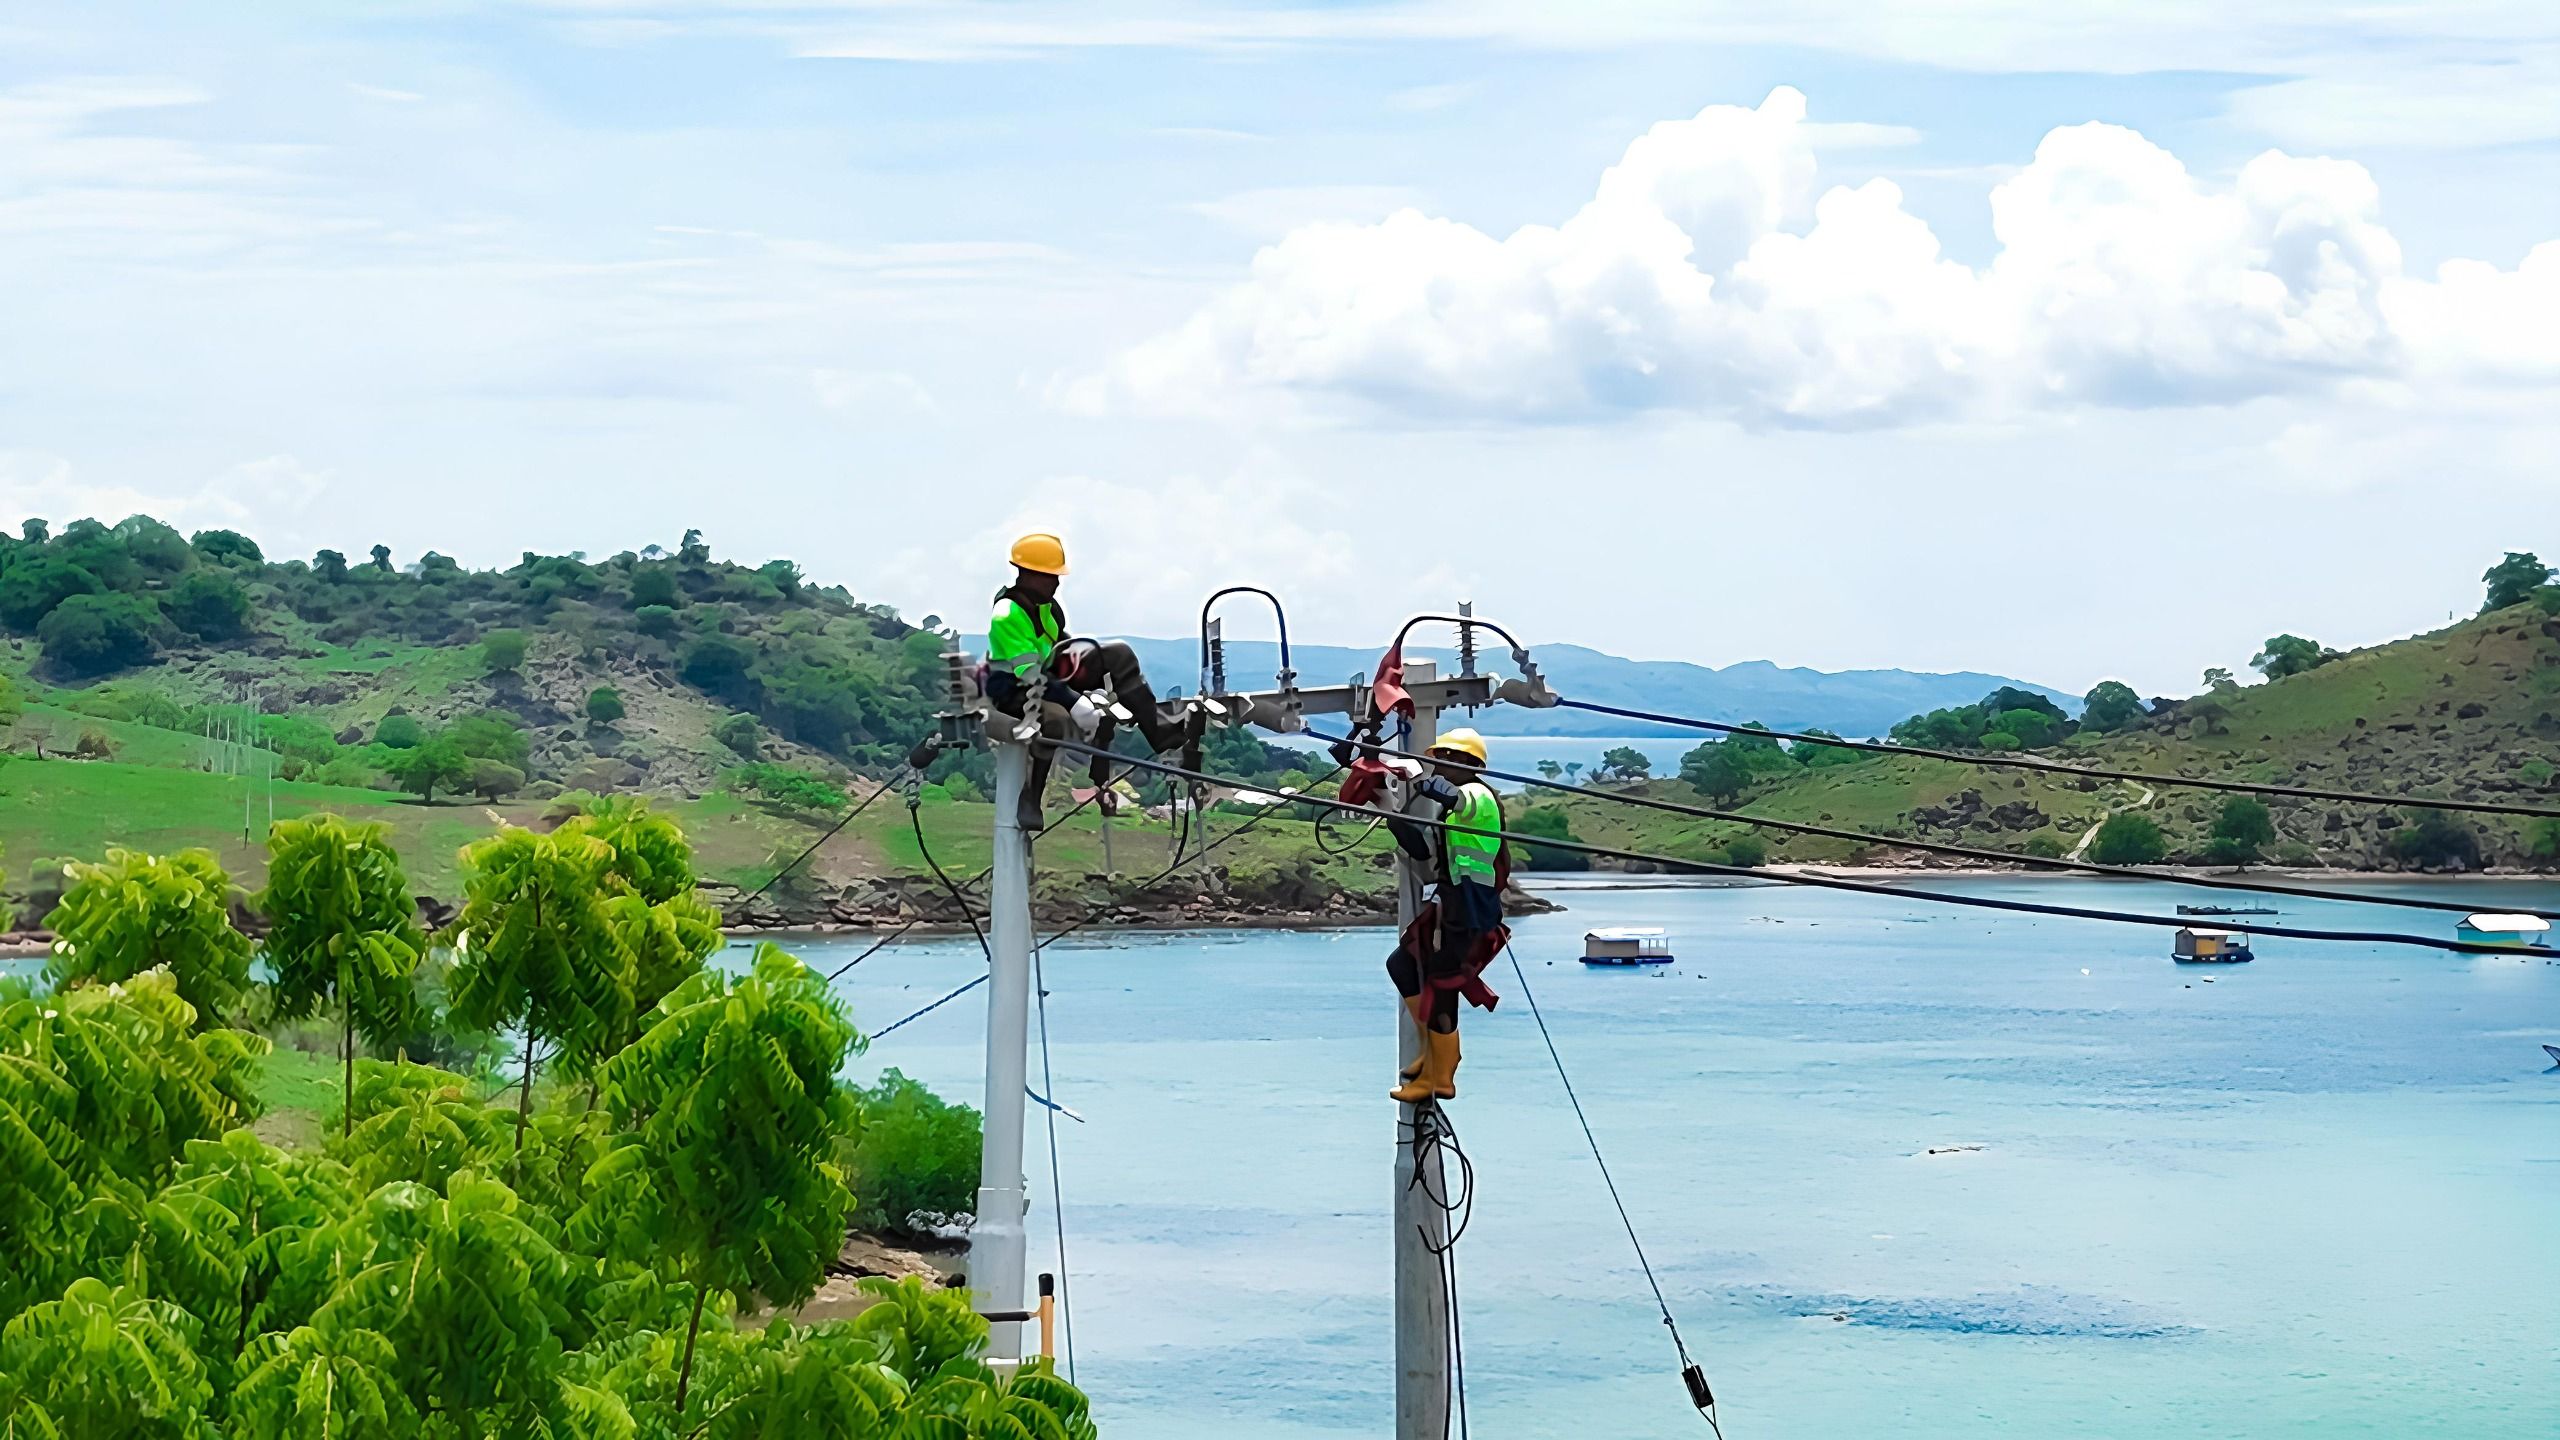 Petugas PLN melakukan pembangunan jaringan listrik yang menghubungkan kelistrikan daerah terpencil Bajo Pulau di Bima, NTB dengan sistem kelistrikan Pulau Sumbawa.